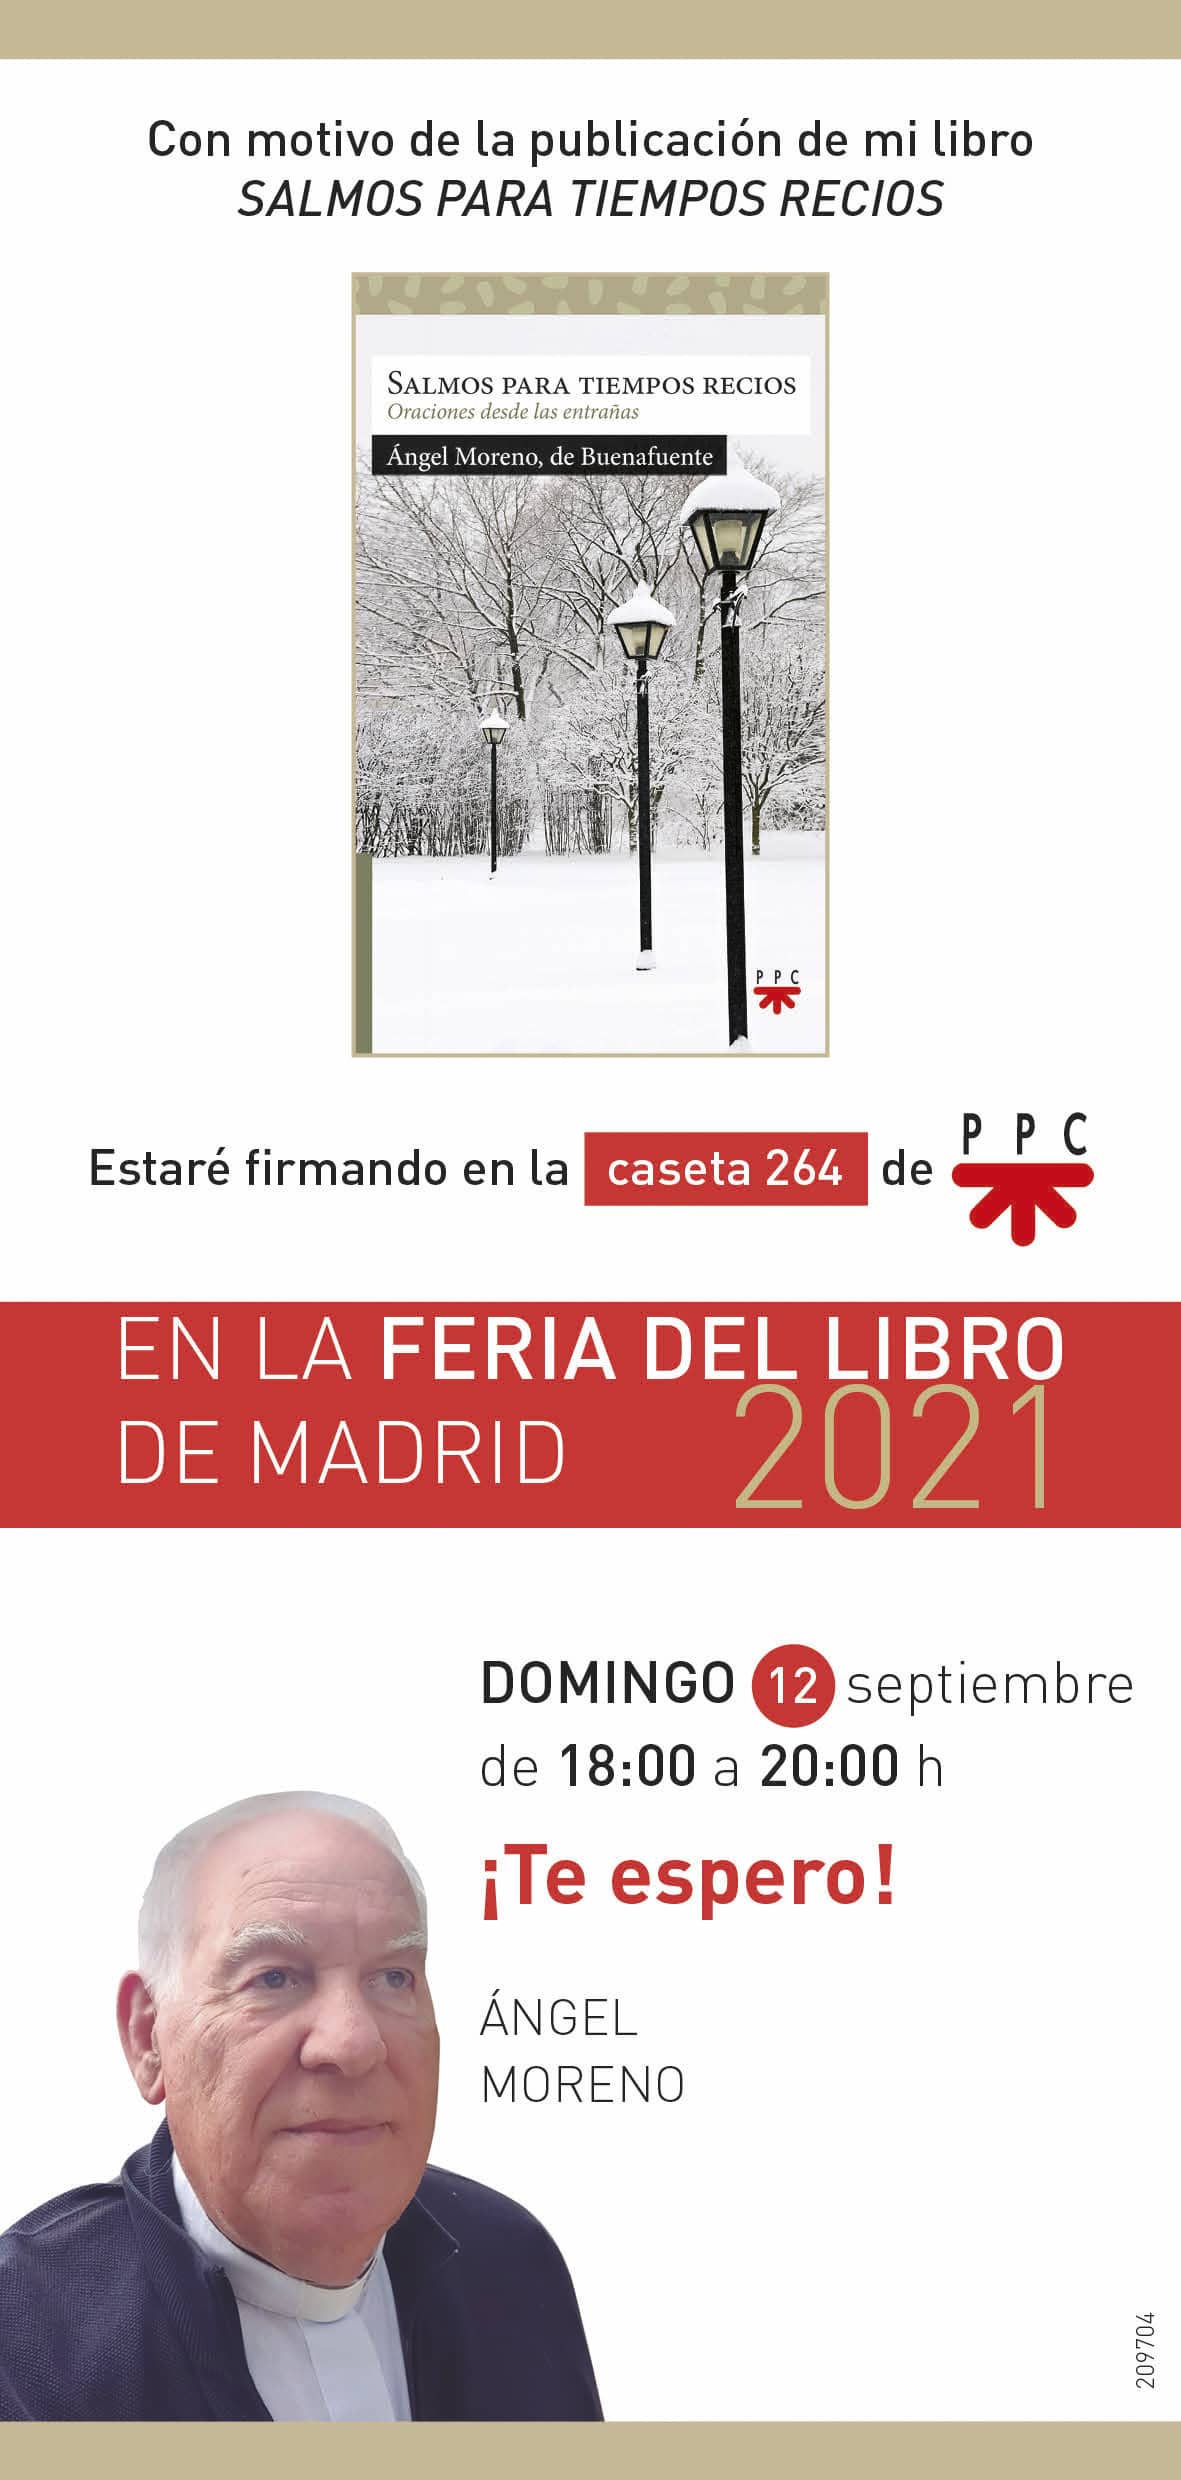 Angel Moreno Feria Libro Madrid 12 9 2021